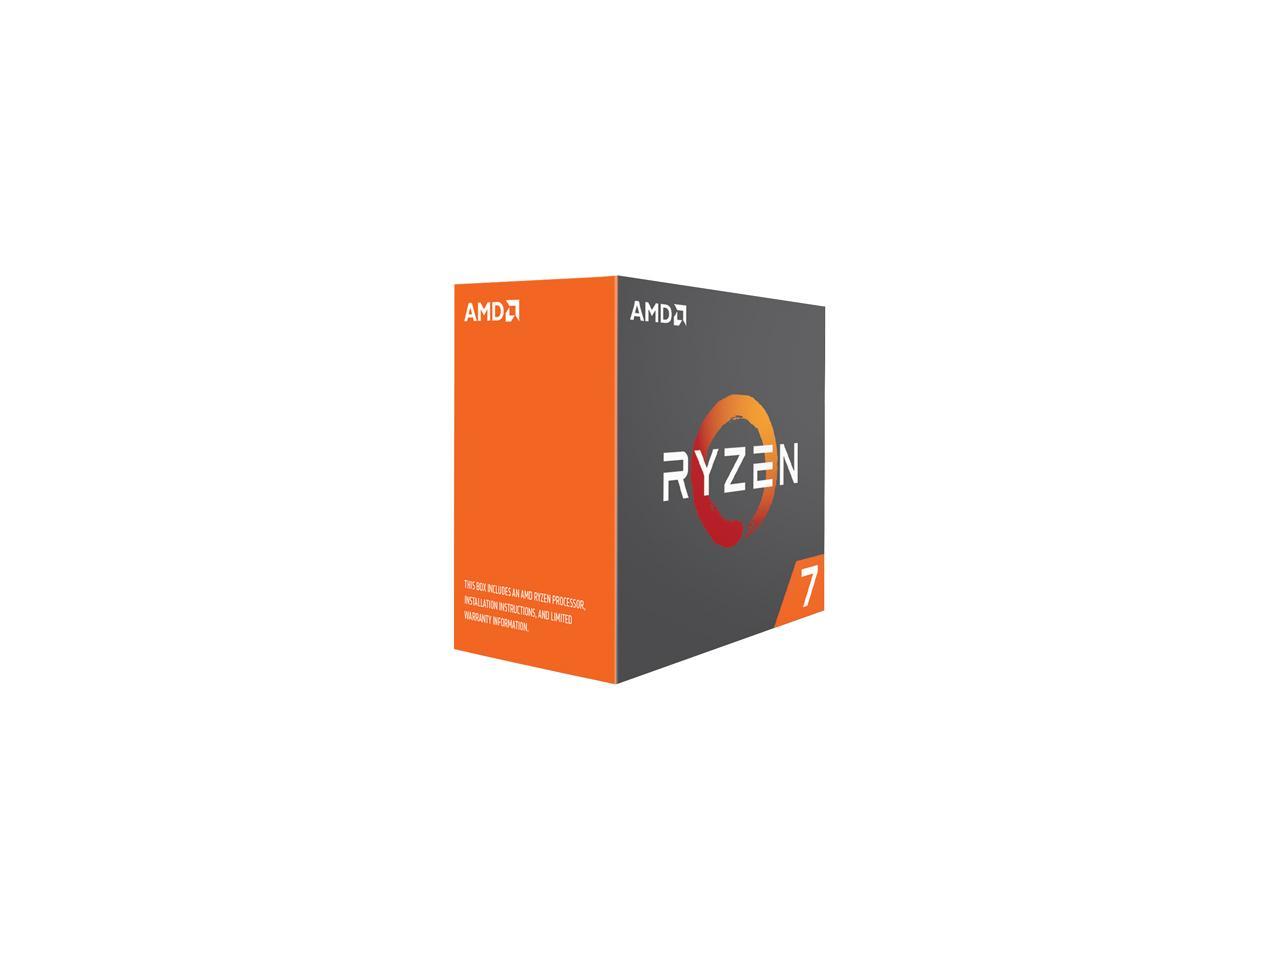 AMD RYZEN 7 1800X 8-Core 3.6 GHz (4.0 GHz Turbo) Socket AM4 95W YD180XBCAEWOF Desktop Processor